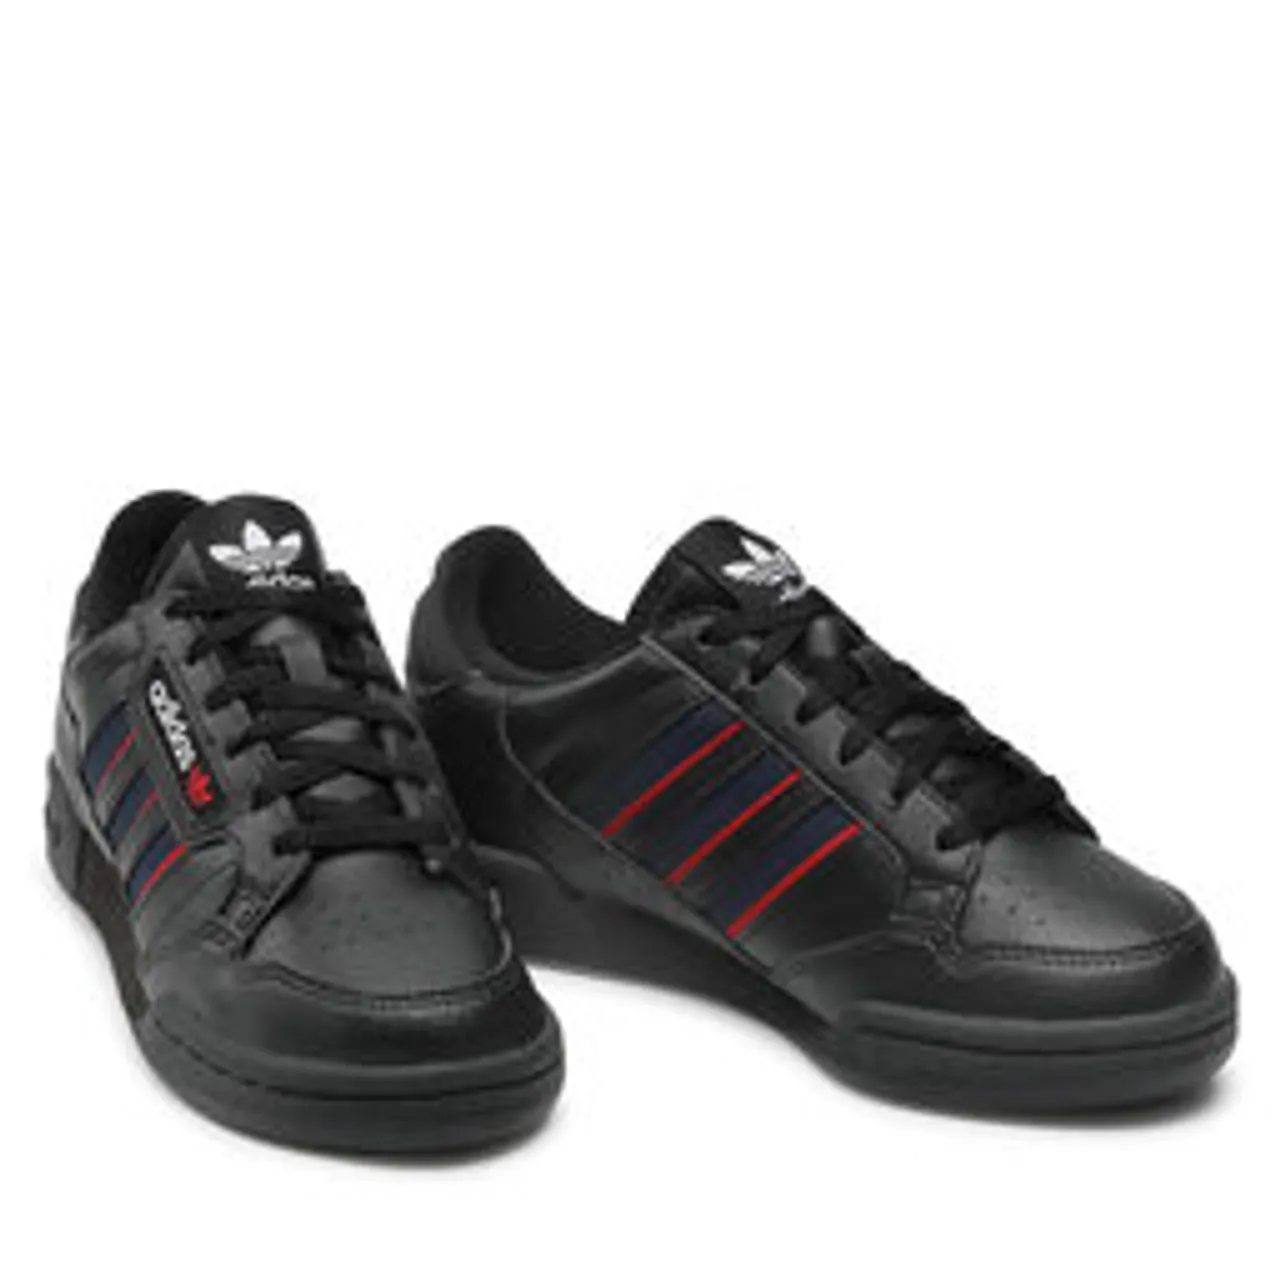 Sneakers adidas Continental 80 Stripes J FY2698 Schwarz